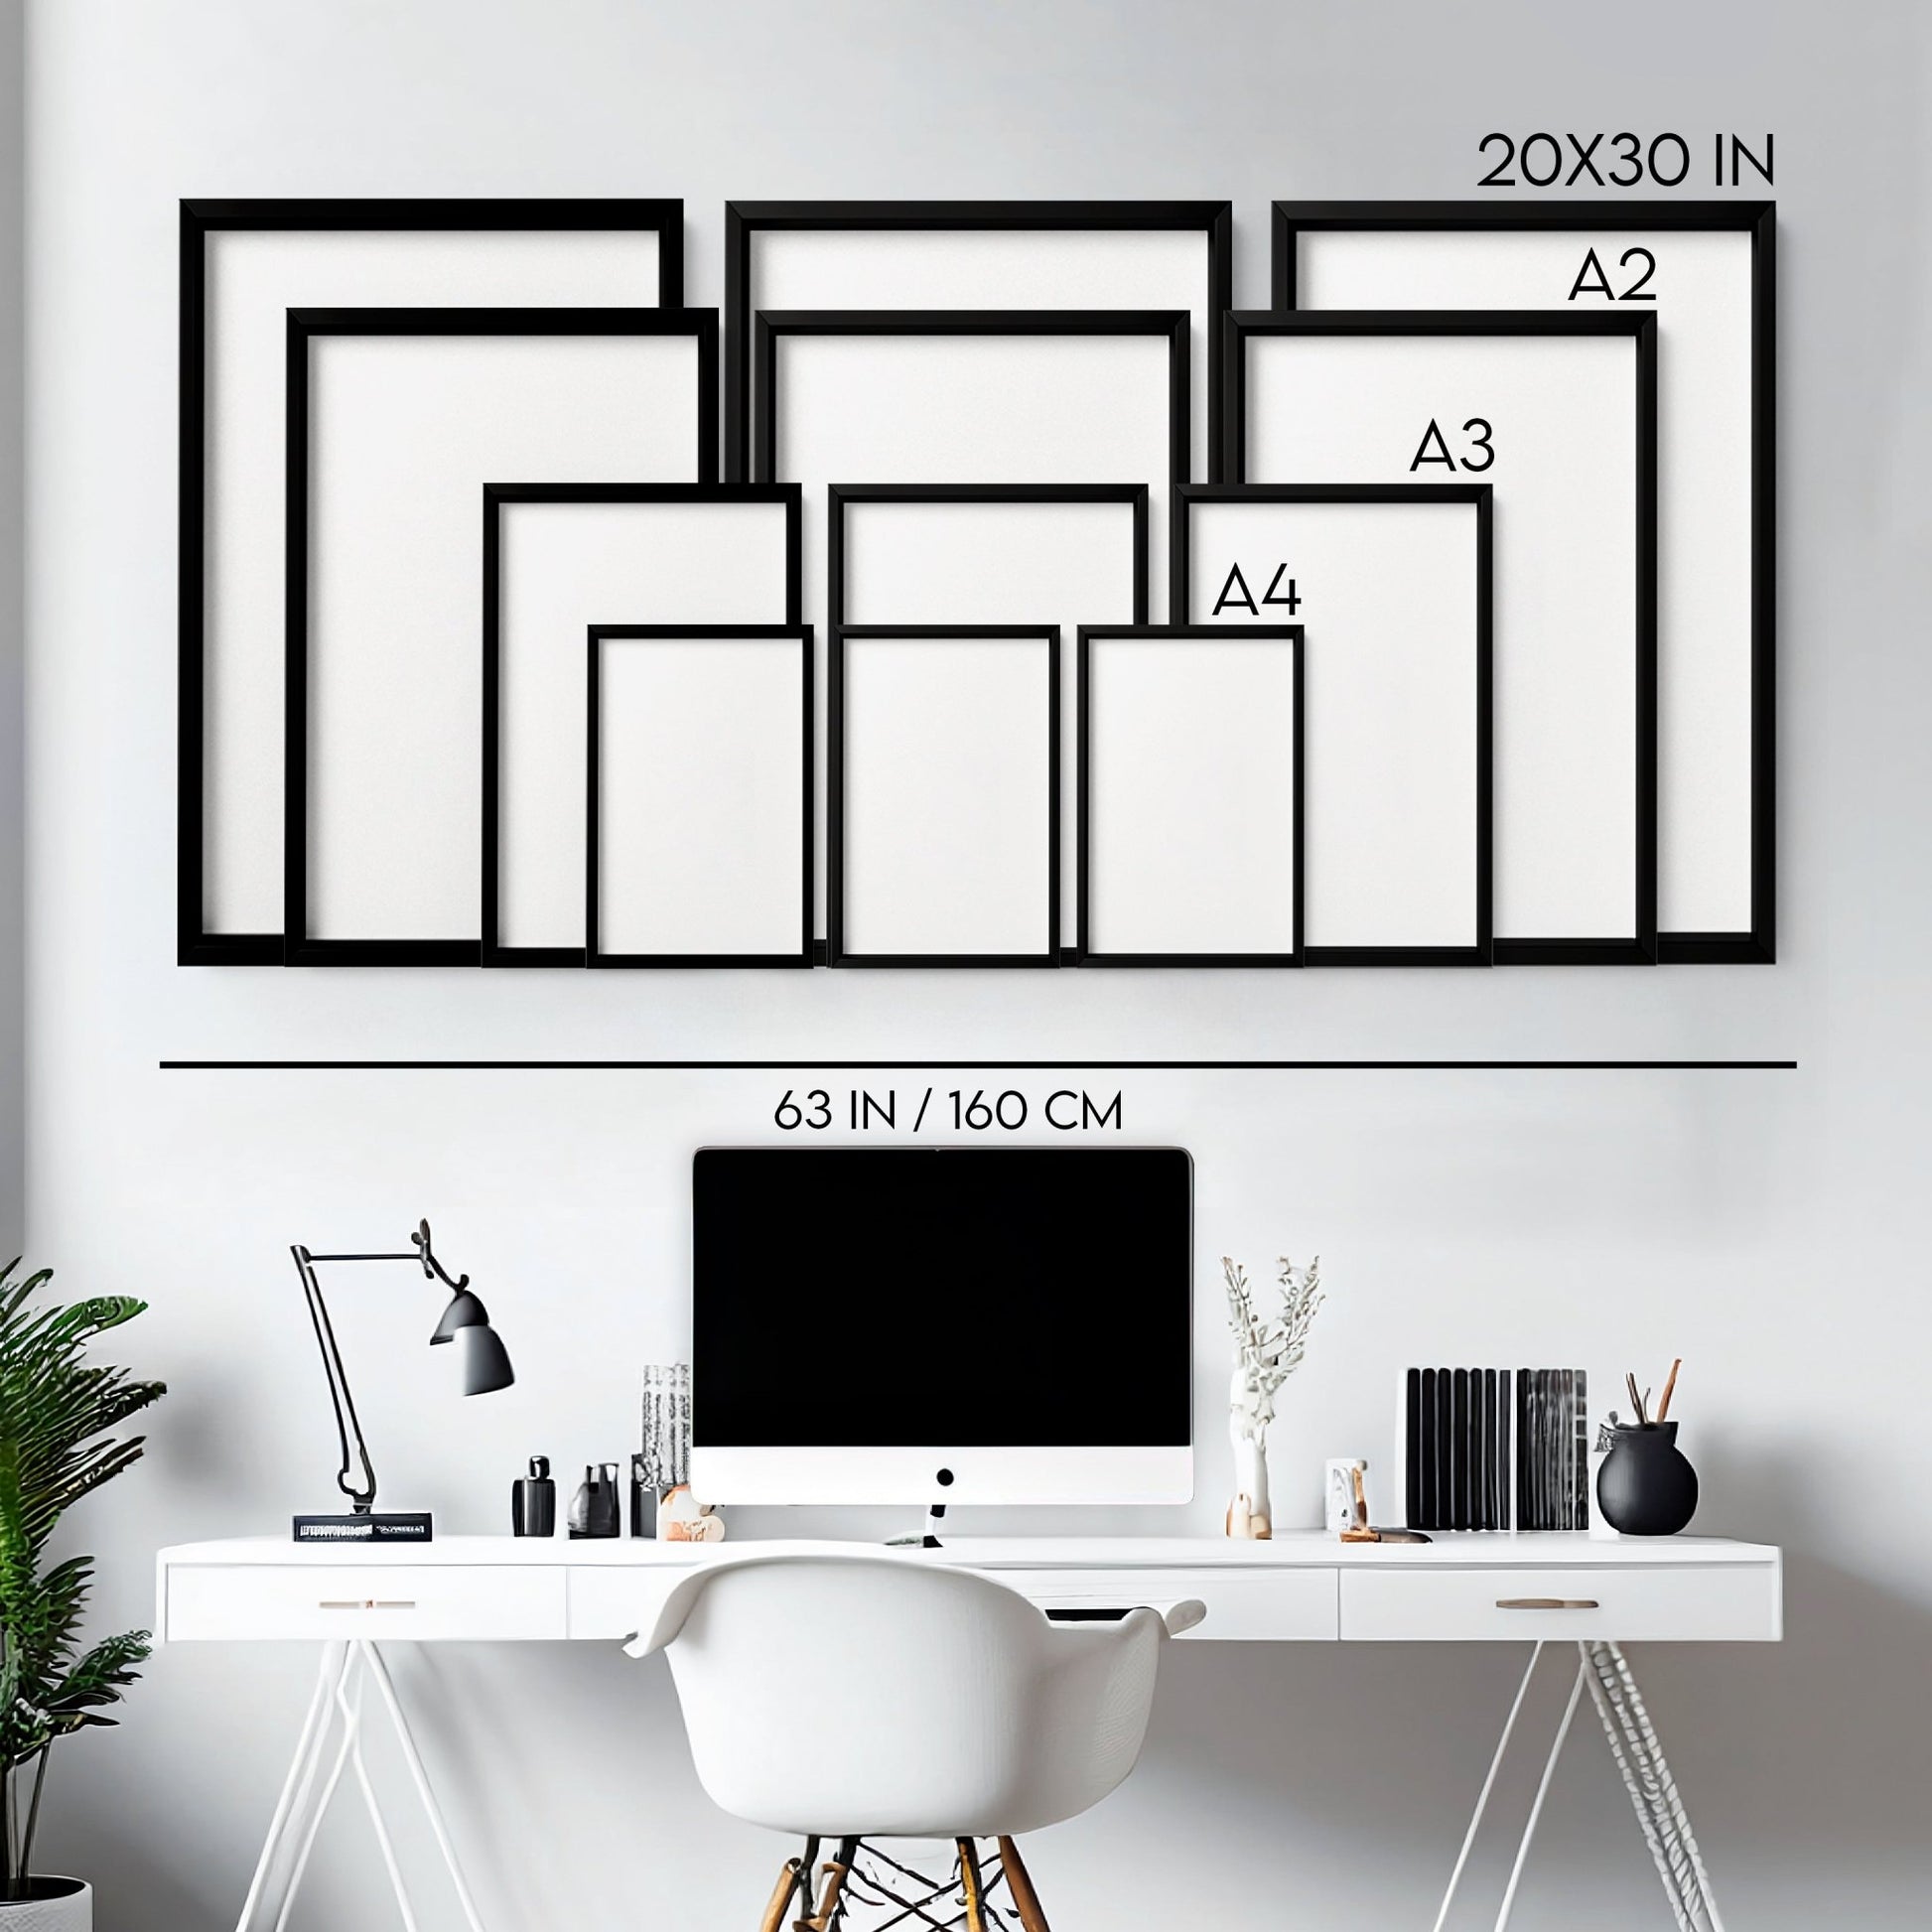 Professional office decor ideas | set of 2 wall art prints - About Wall Art